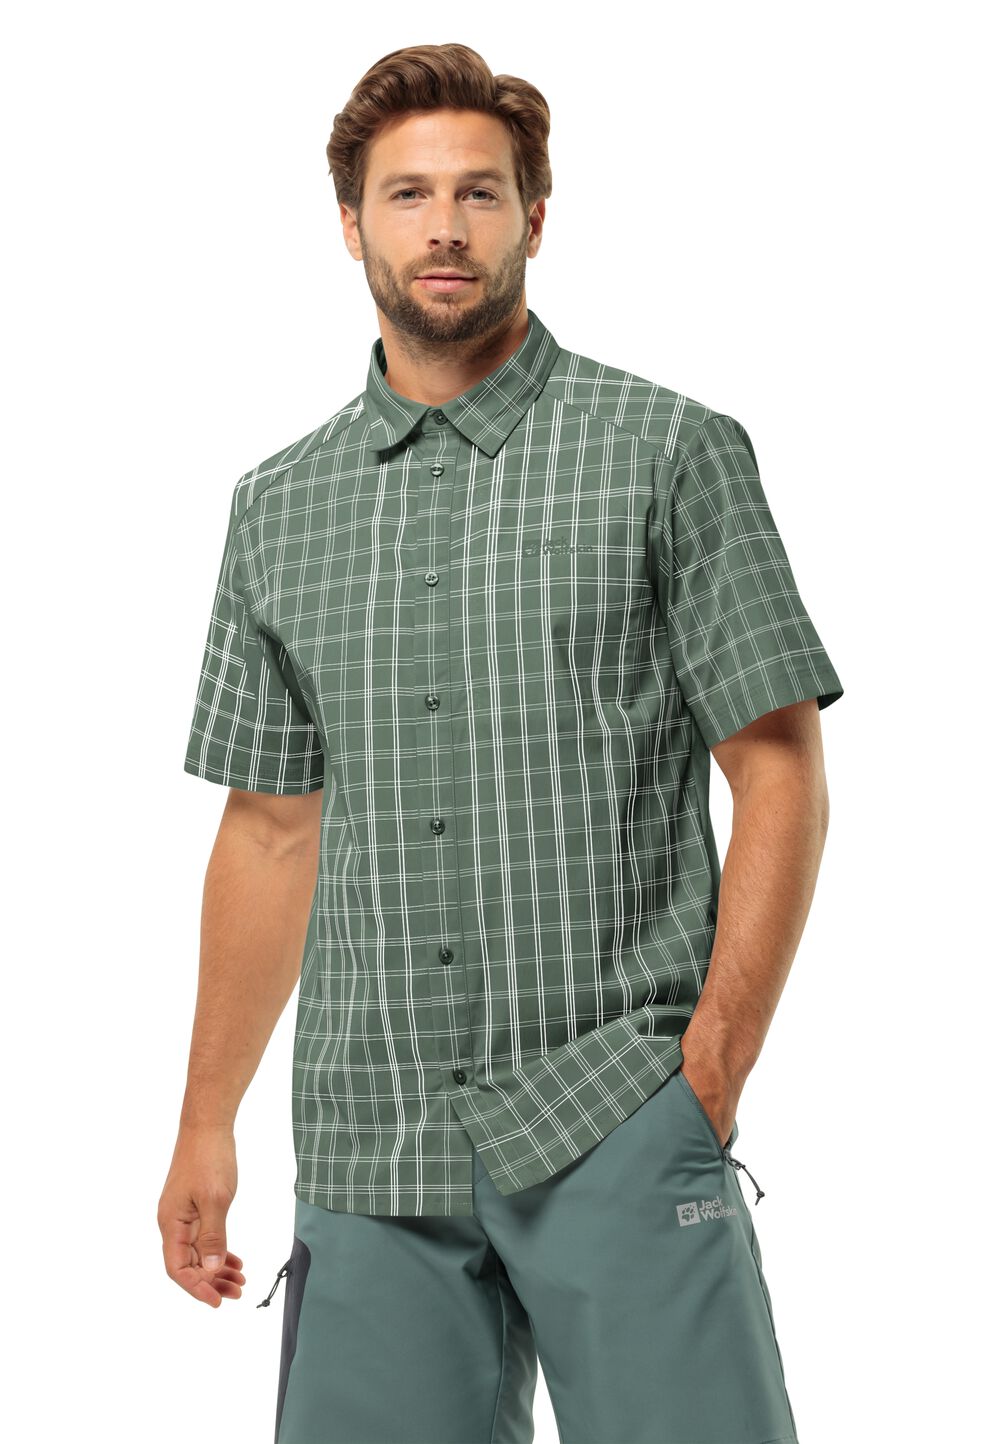 Jack Wolfskin Norbo S S Shirt Men Overhemd met korte mouwen Heren XXL hedge green checks hedge green checks